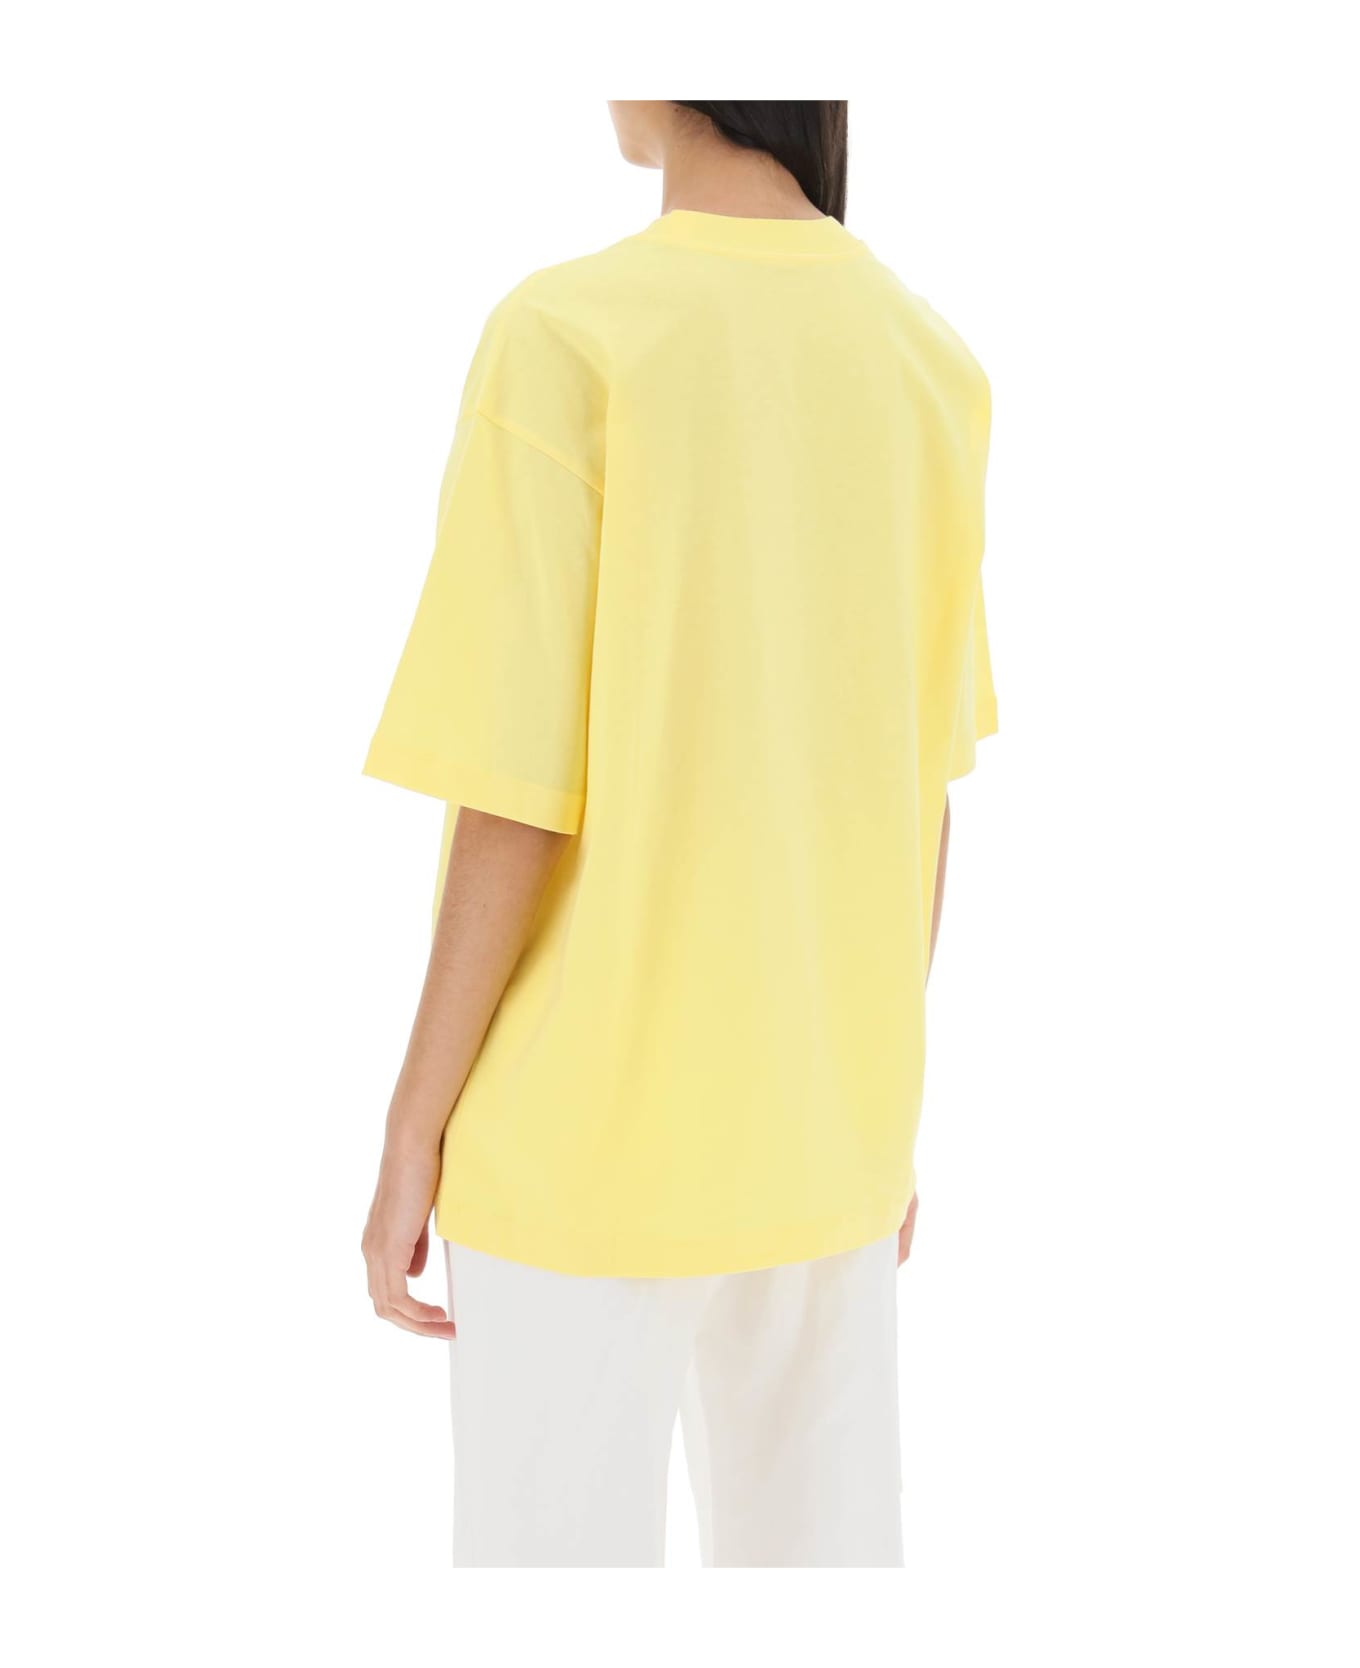 Marni Logo T-shirt - Yellow